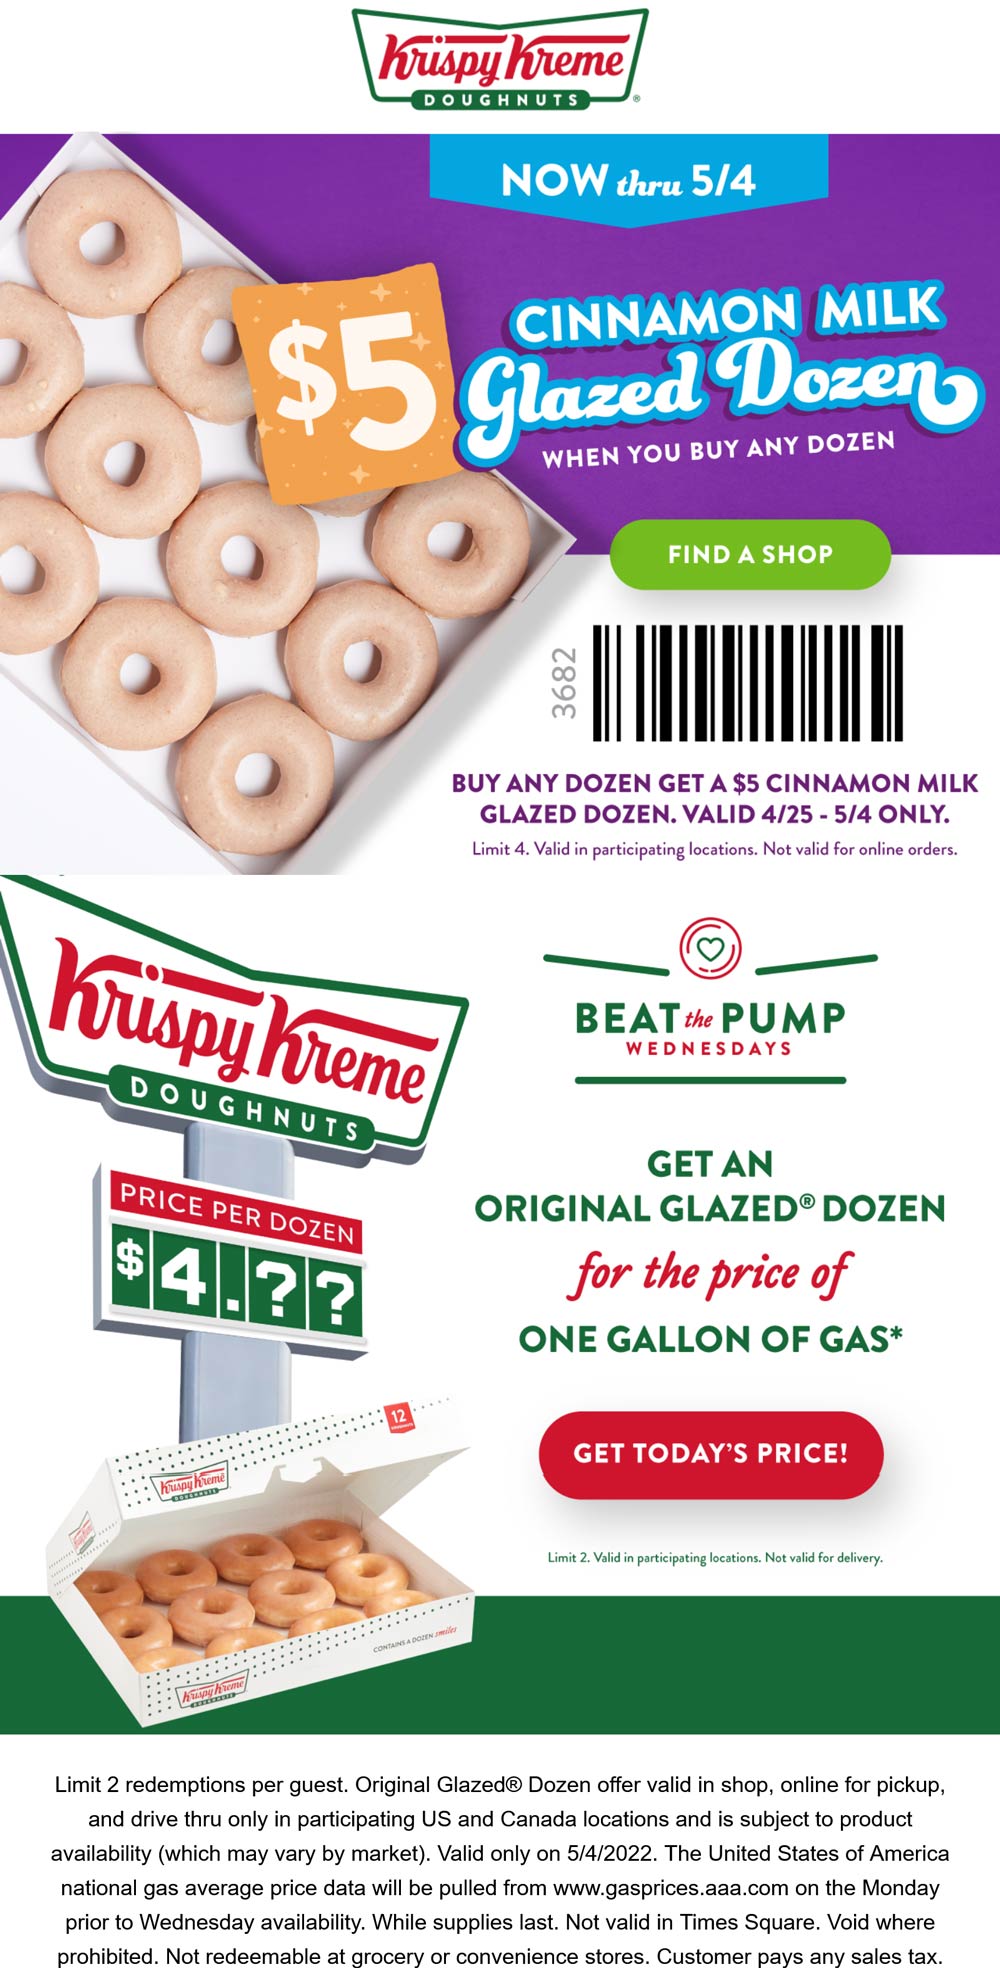 Krispy Kreme restaurants Coupon  $4.19 dozen glazed doughnuts & more today at Krispy Kreme #krispykreme 